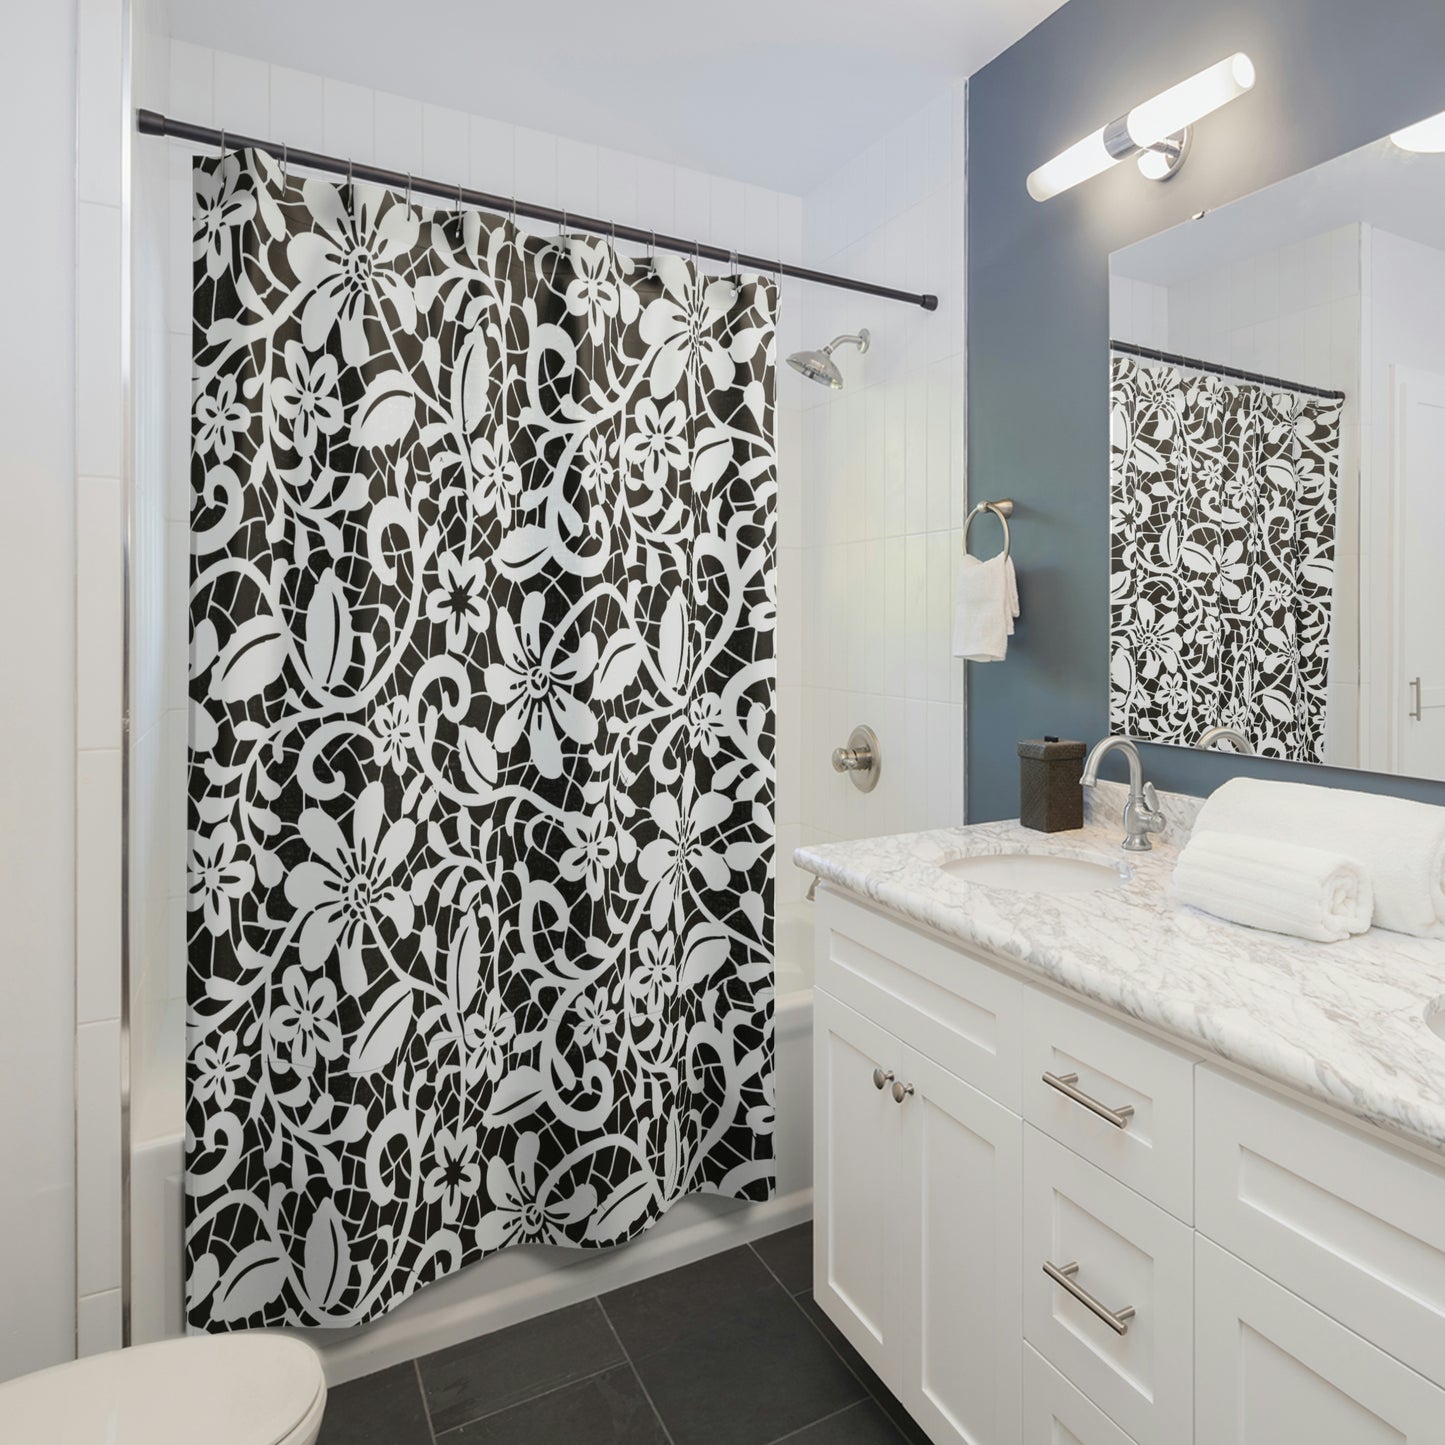 Floral Shower Curtain / Black Shower Curtain / Floral Bathroom Decor / White Floral Decor